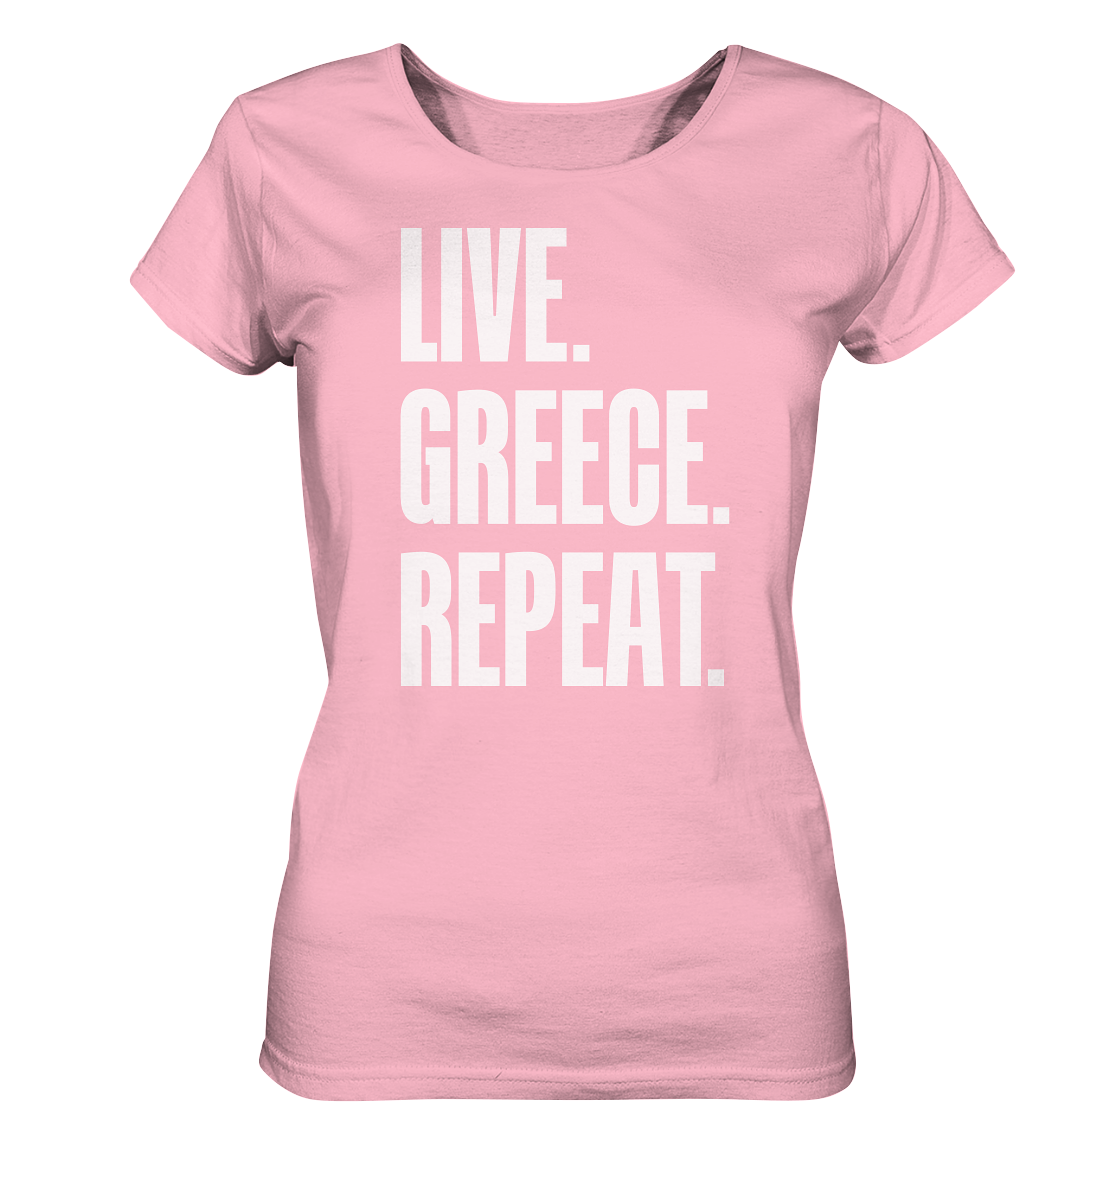 LIVE. GREECE. REPEAT. - Ladies Organic Shirt